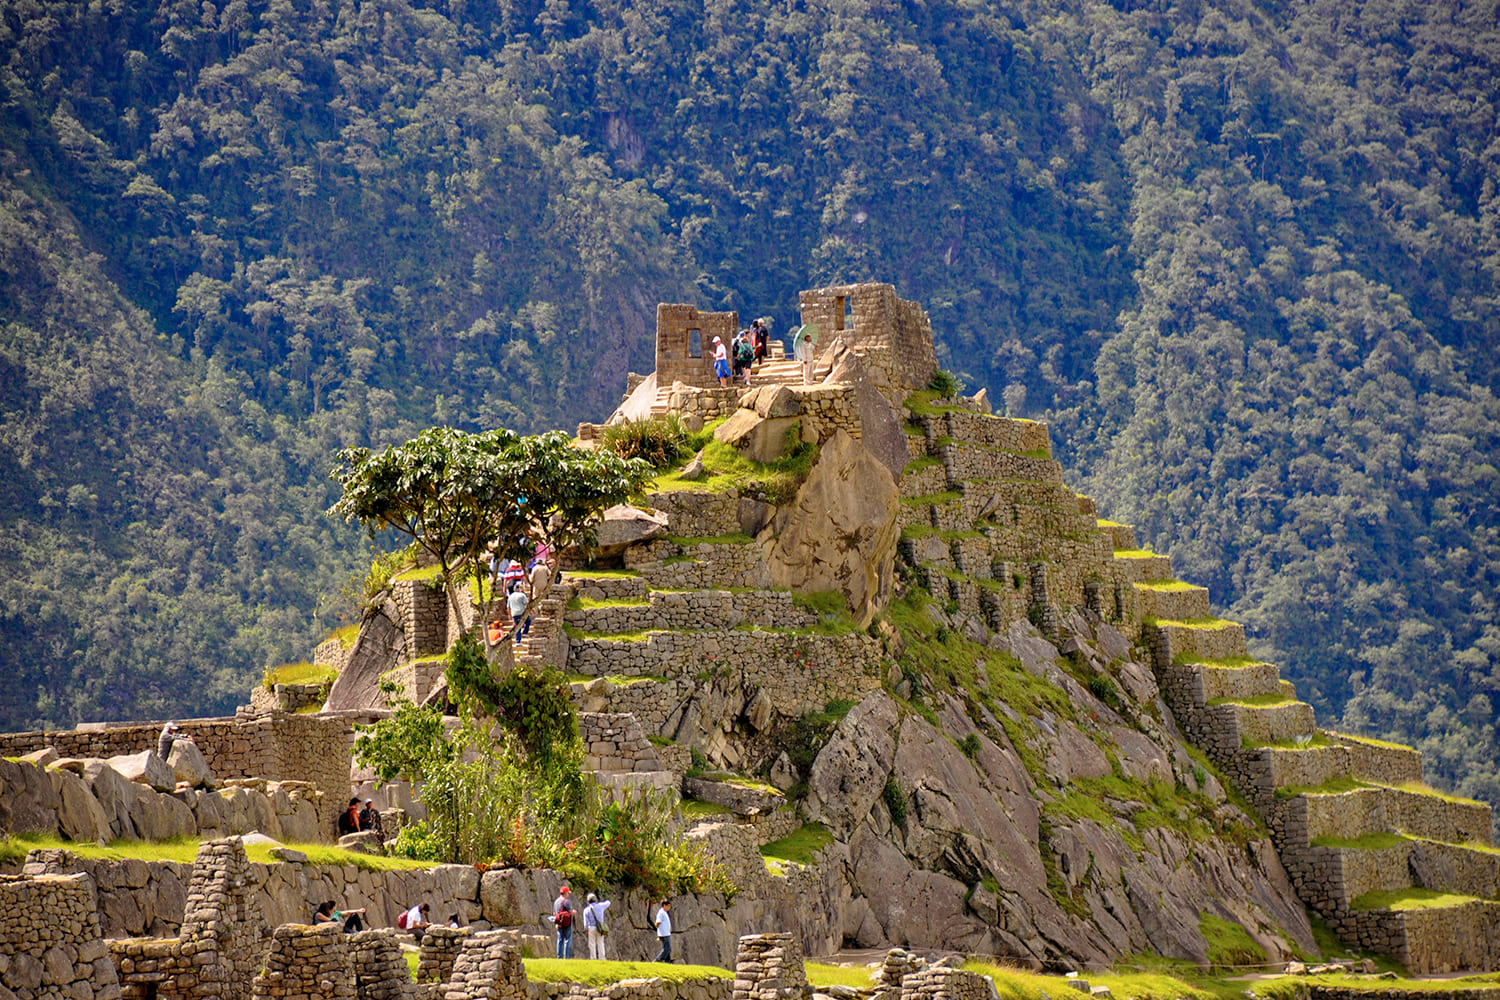 Increase in capacity at Machu Picchu